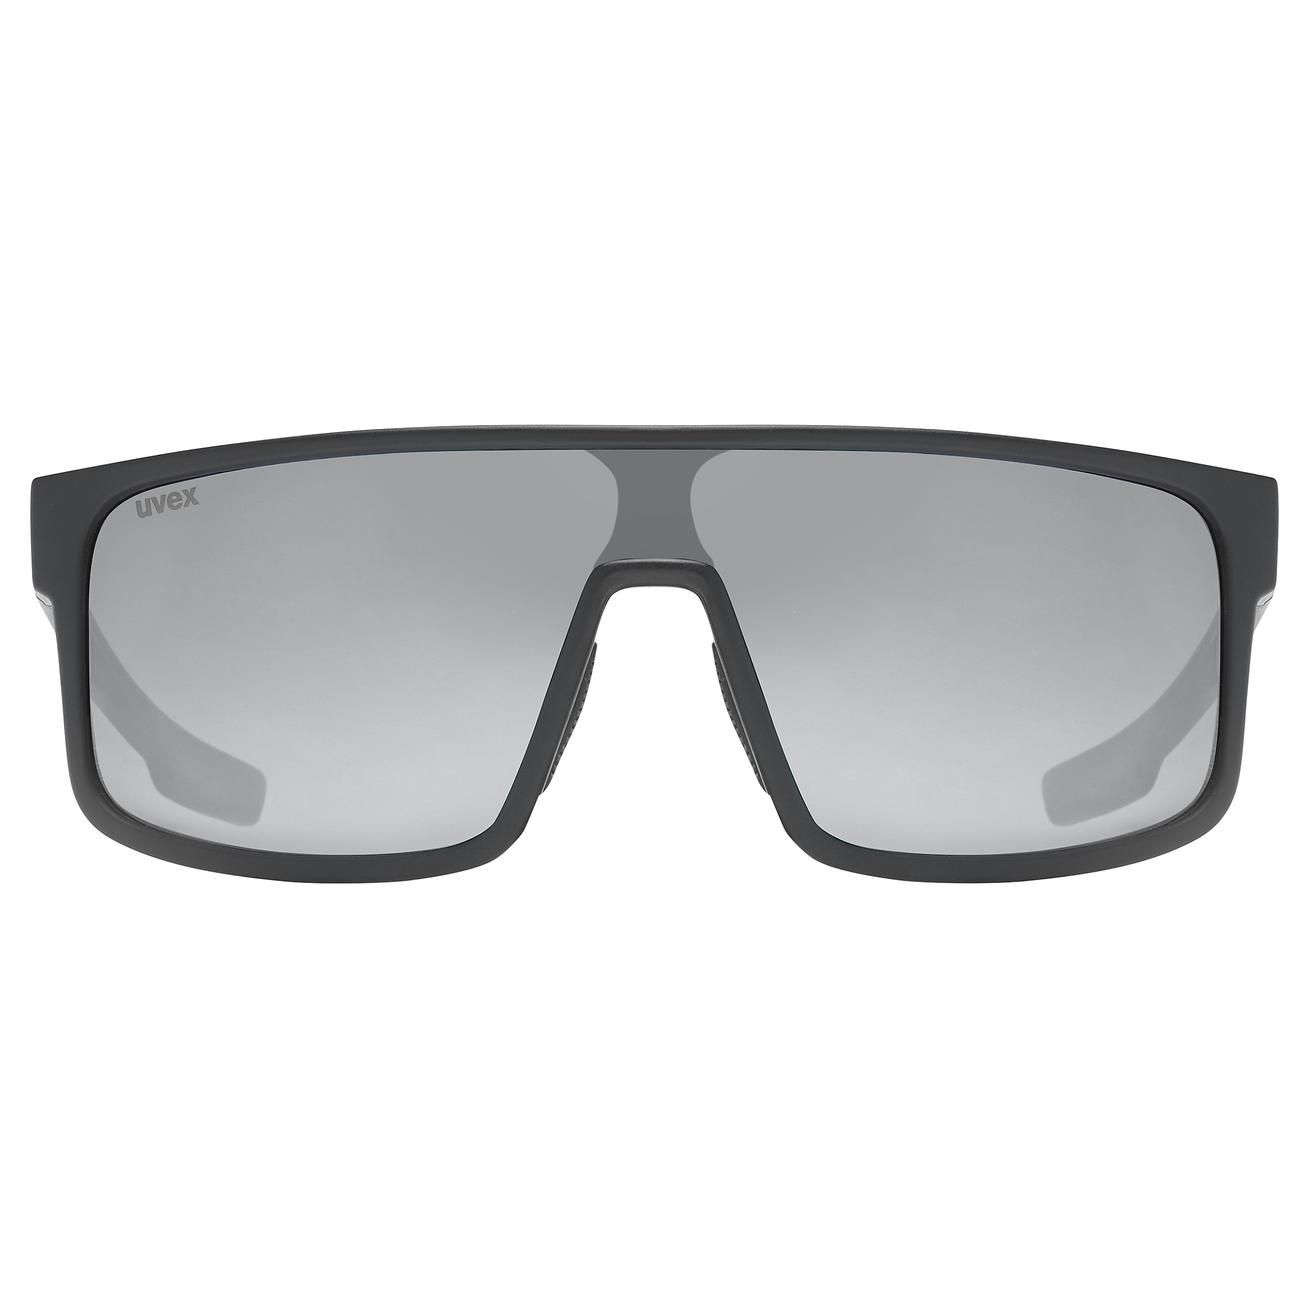 uvex LGL 51 black mat mirror silver | Lifestyle goggles | uvex sports